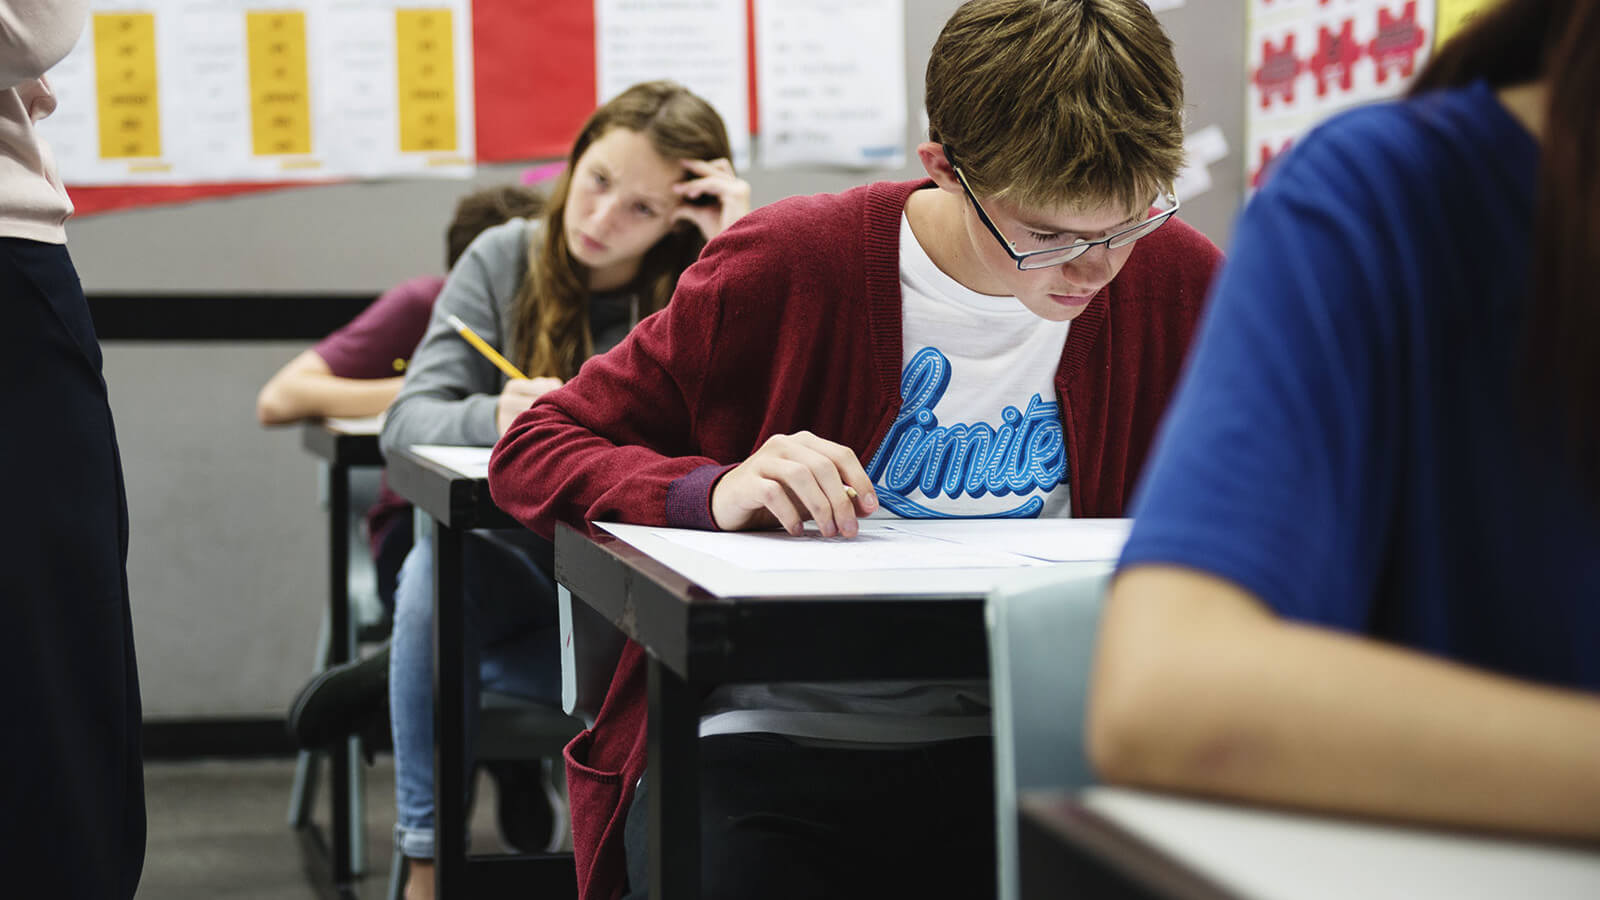 students focused on exam in high school classroom